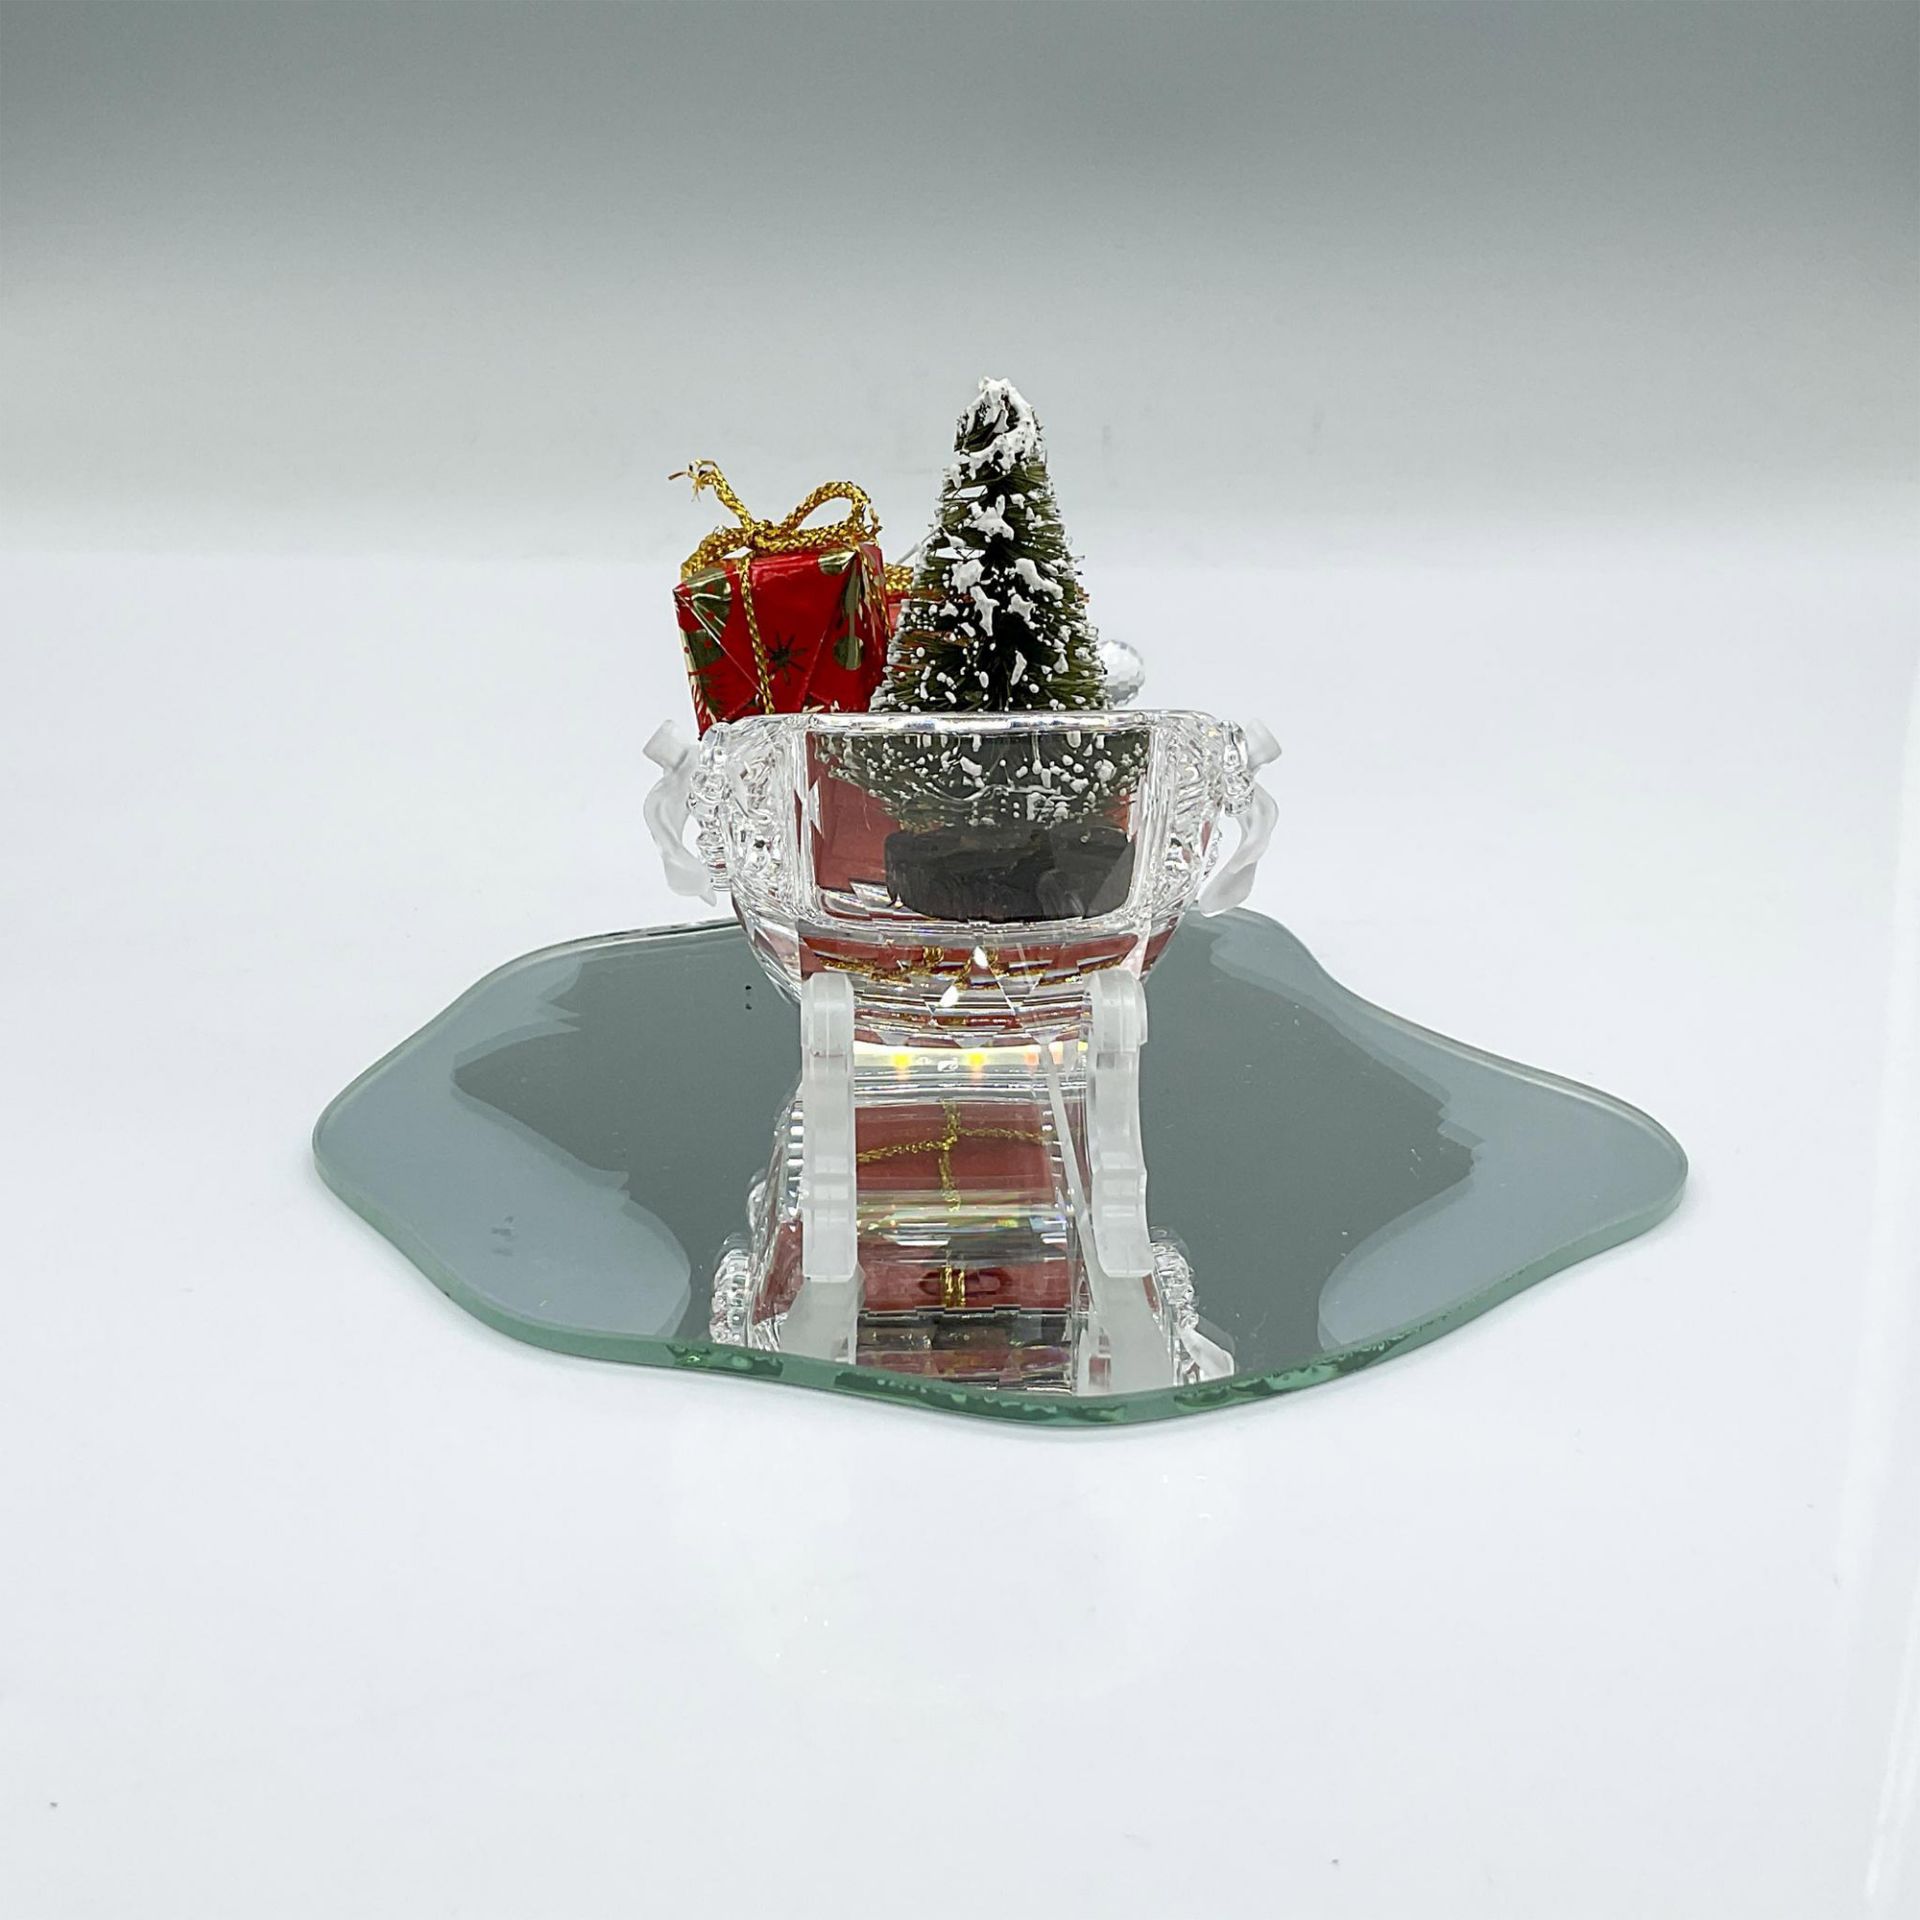 Swarovski Crystal Figurine, Santa's Christmas Sleigh - Image 3 of 6